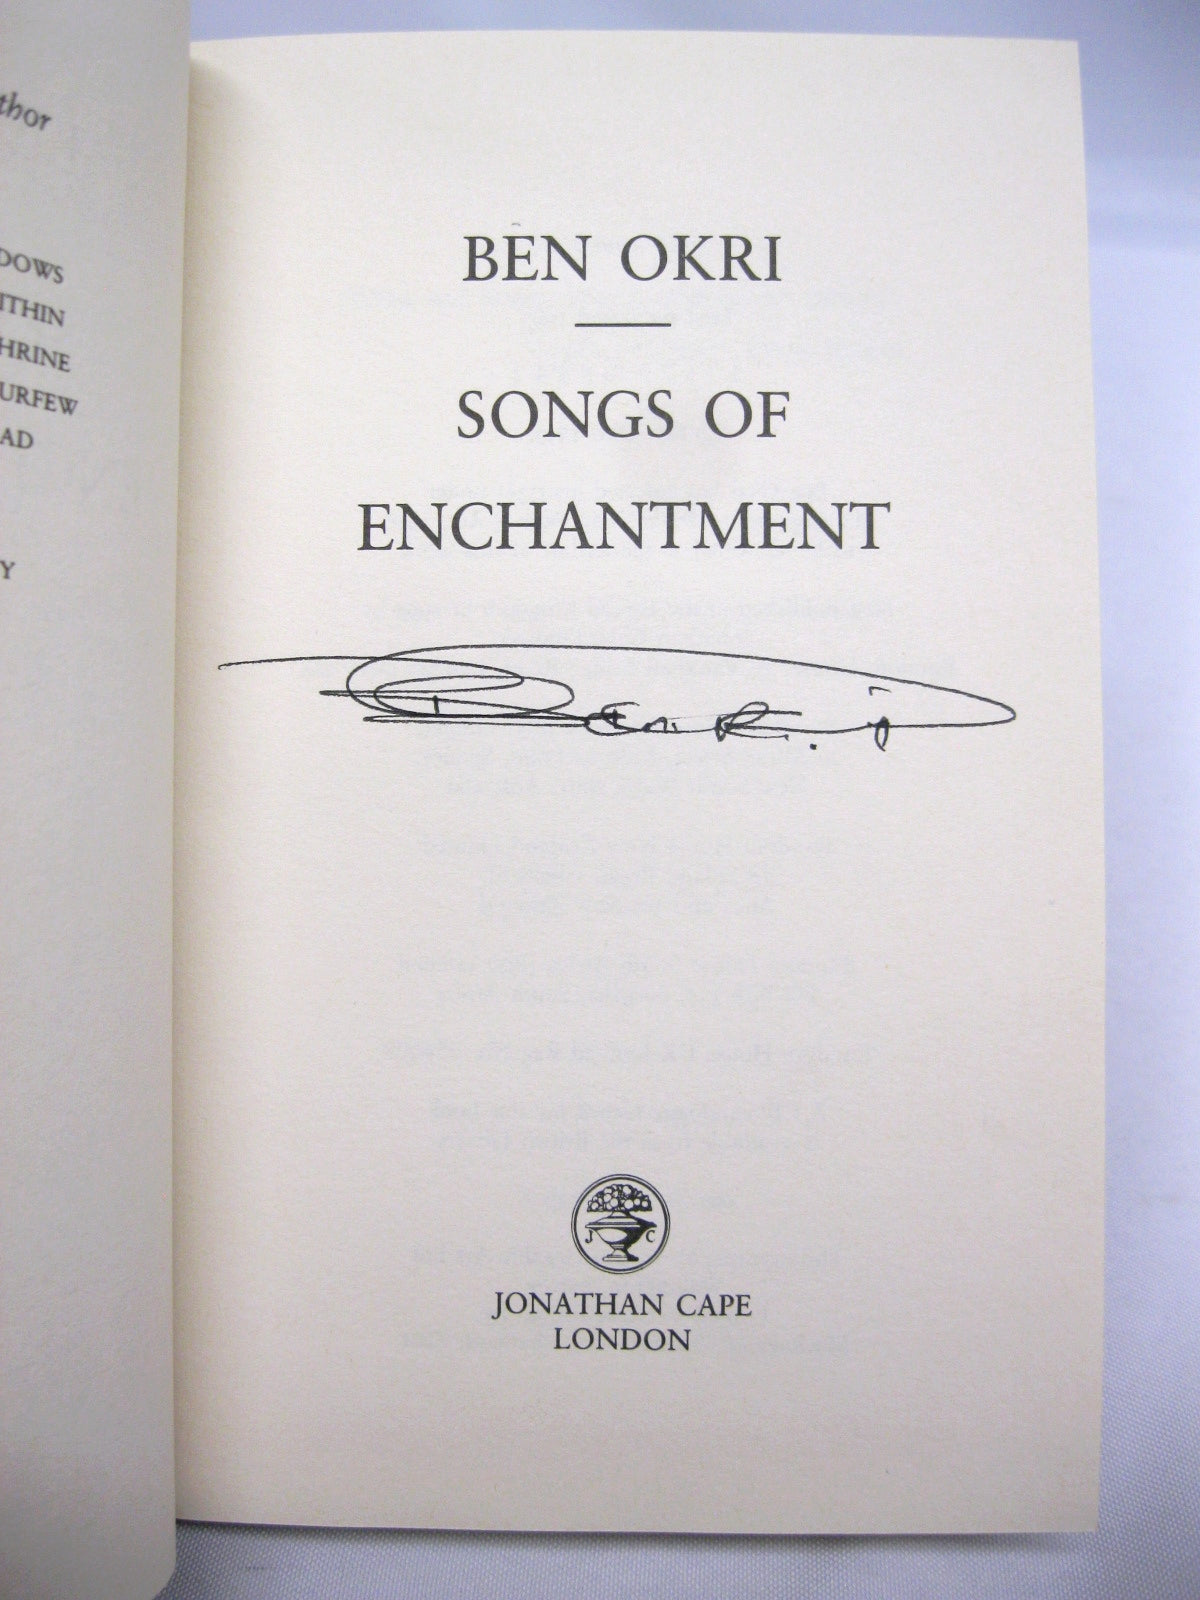 Songs of Enchantment by Ben Okri